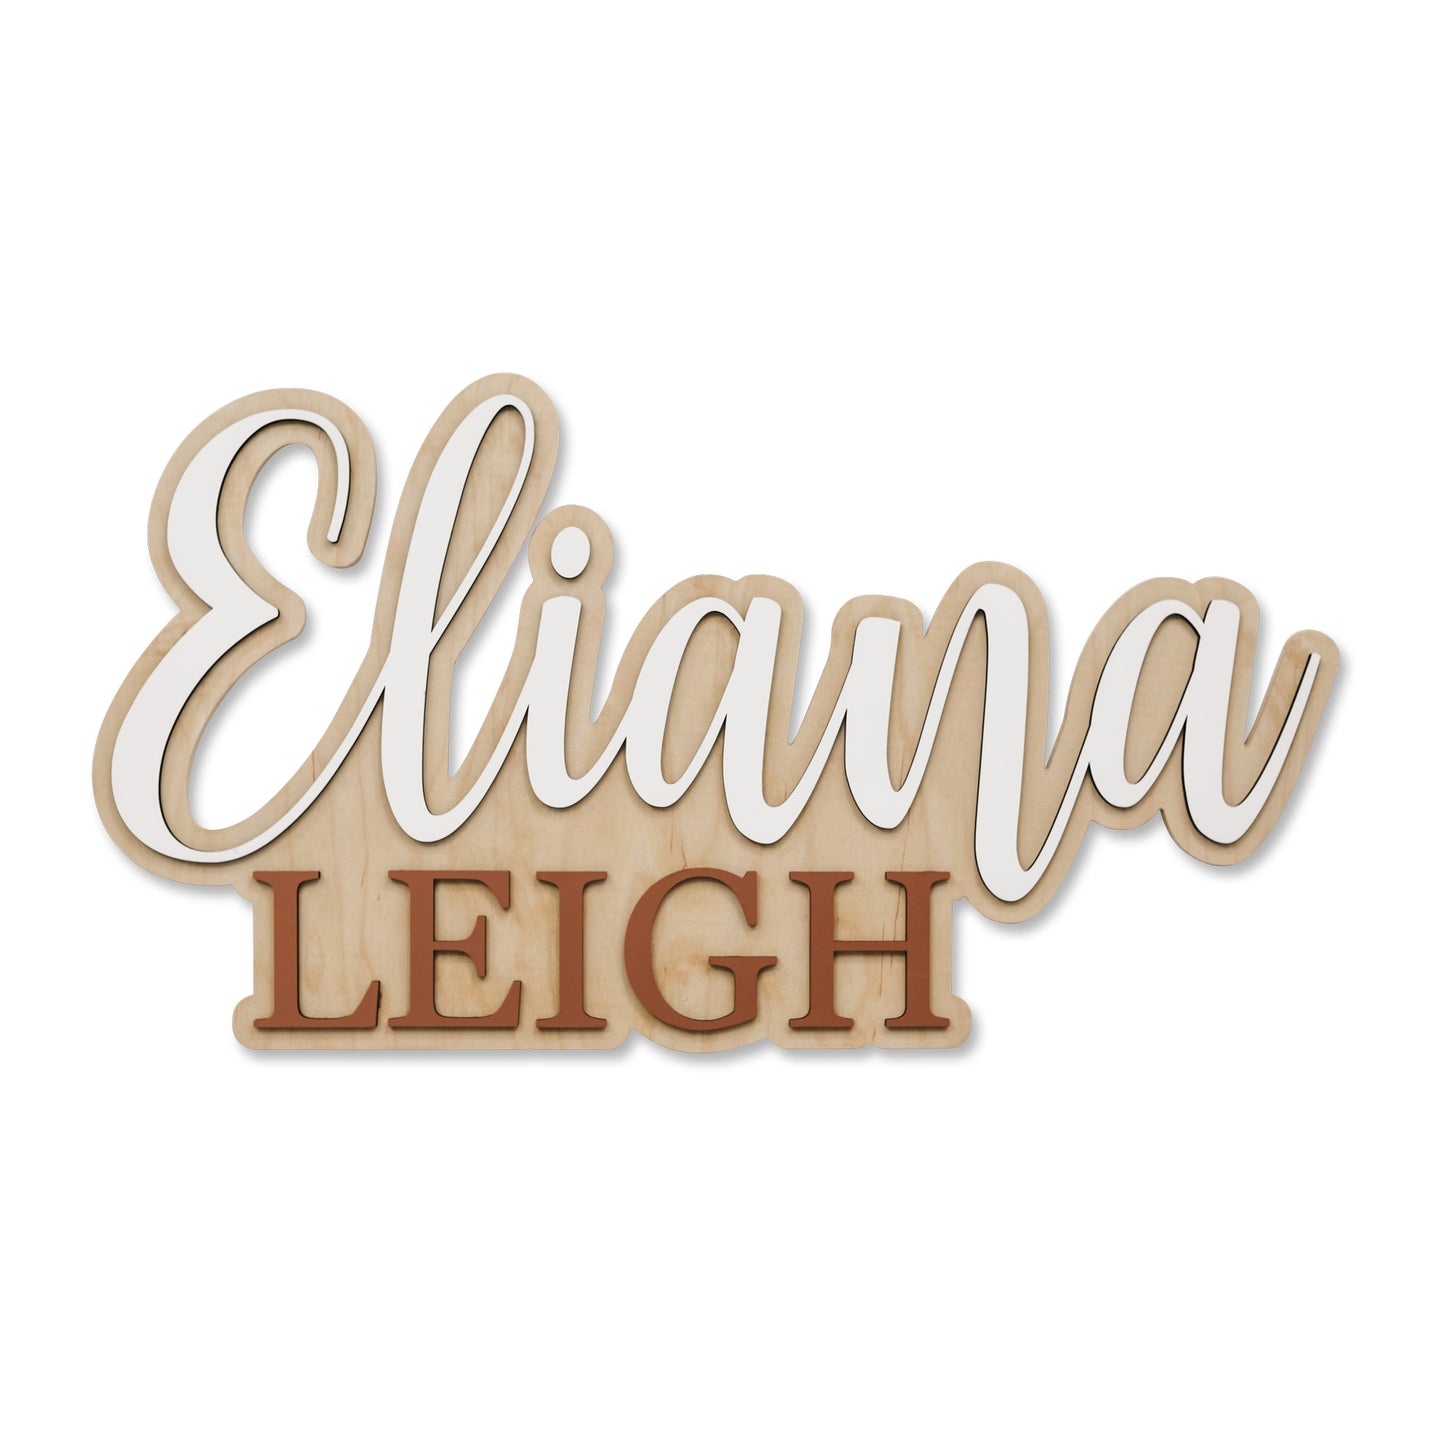 Eliana Leigh 2 Layered Sign